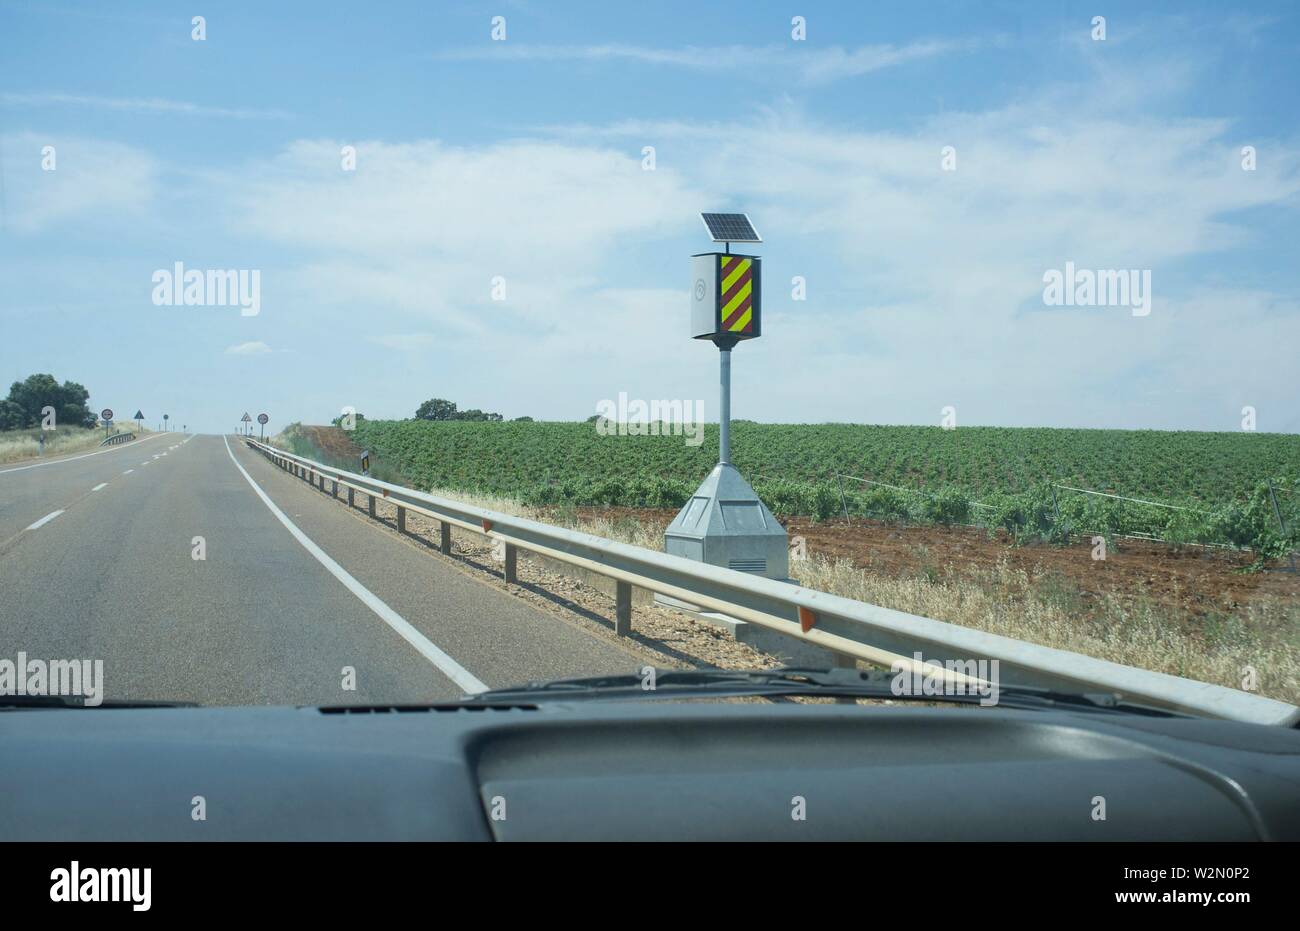 Spanisch Drehzahlregelung pole Gerät an der Landstraße. Blick aus dem Inneren des Autos. Stockfoto